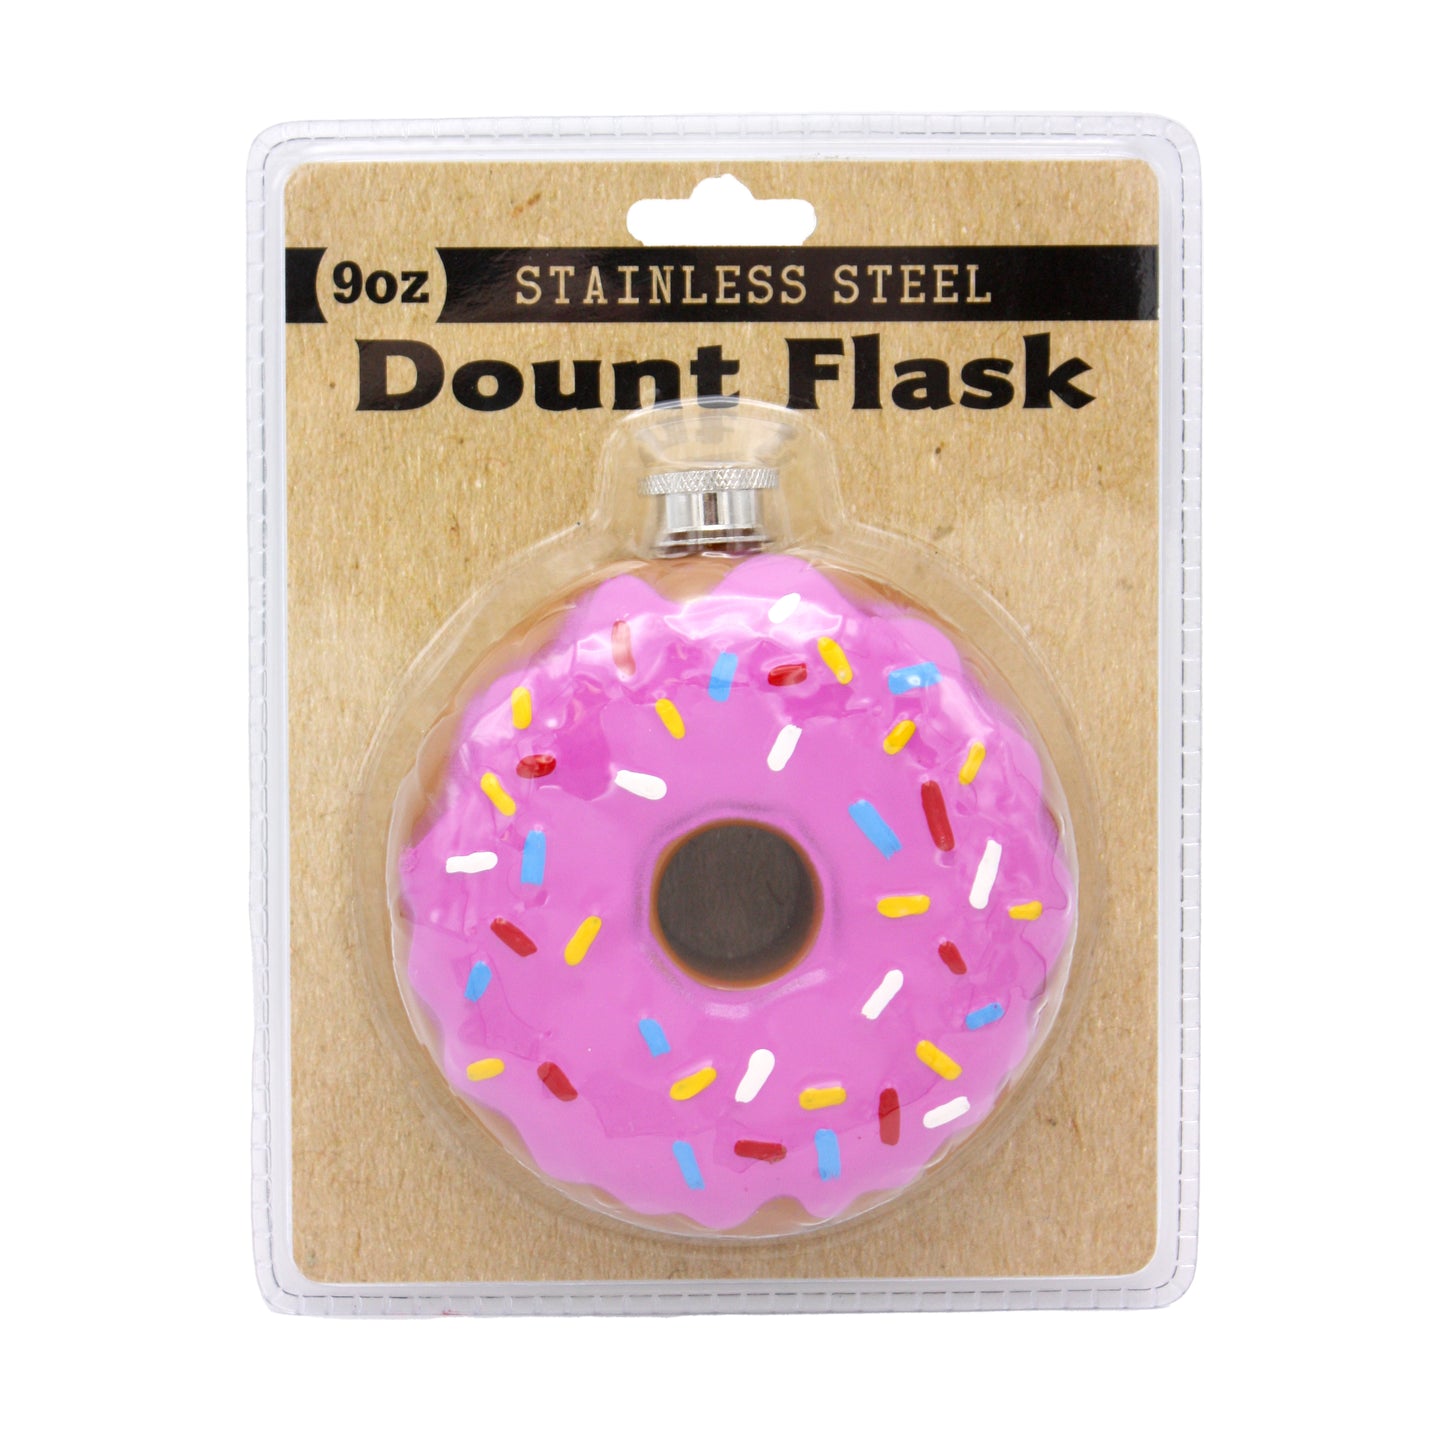 Donut Flask